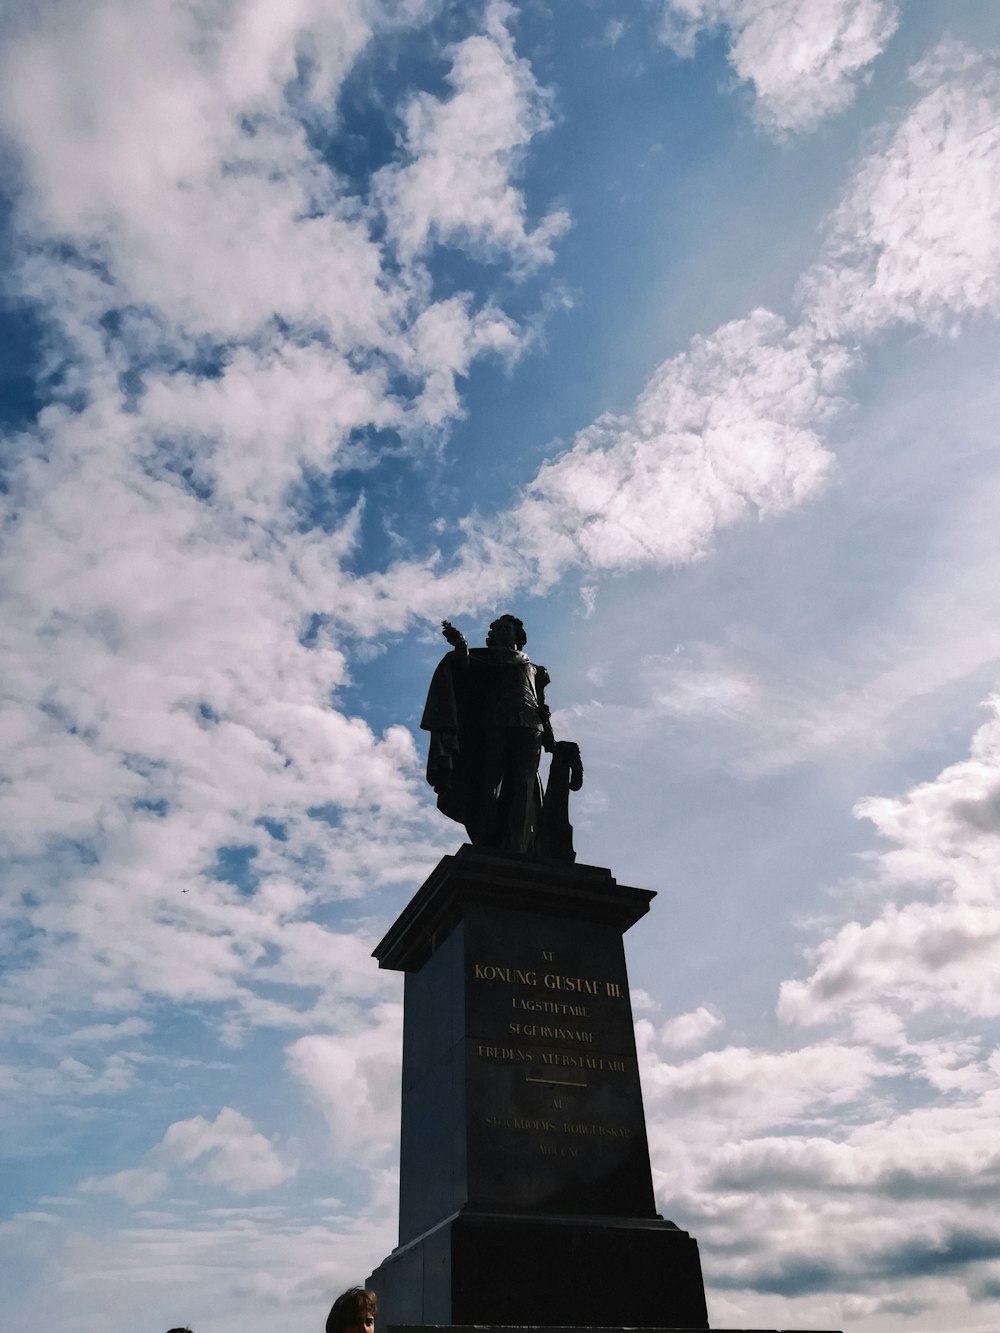 a man standing next to a statue under a cloudy blue sky